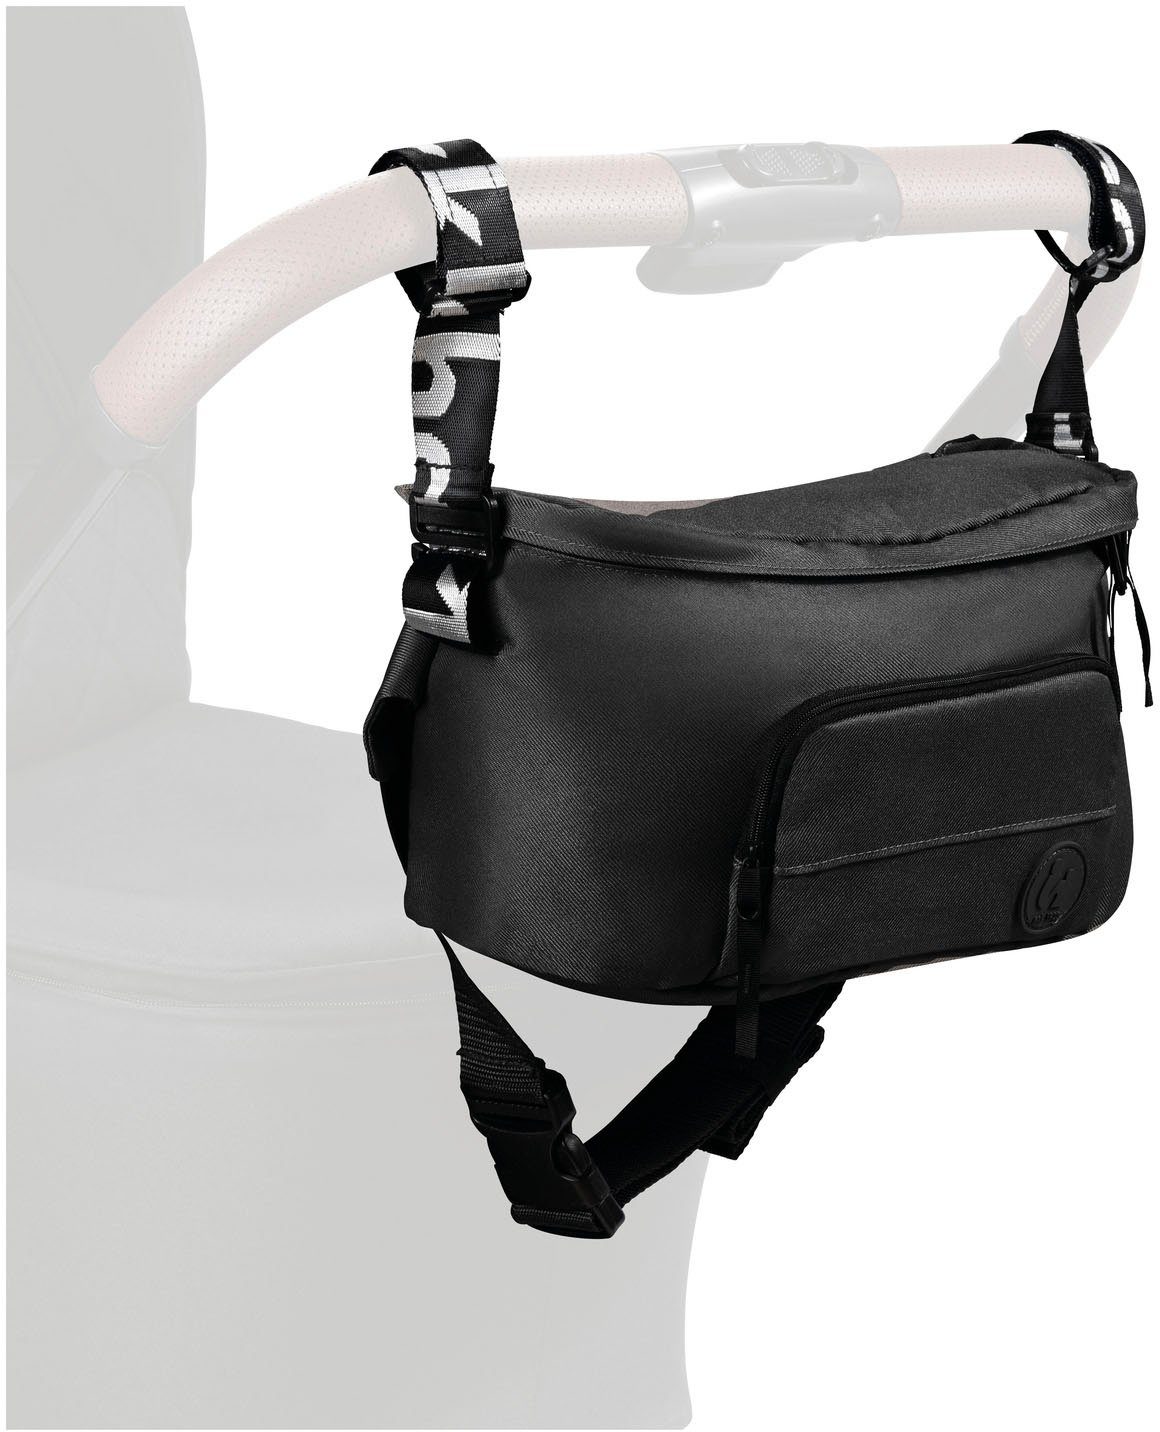 Hauck Kinderwagen-Tasche Black Bag Pushchair Hip